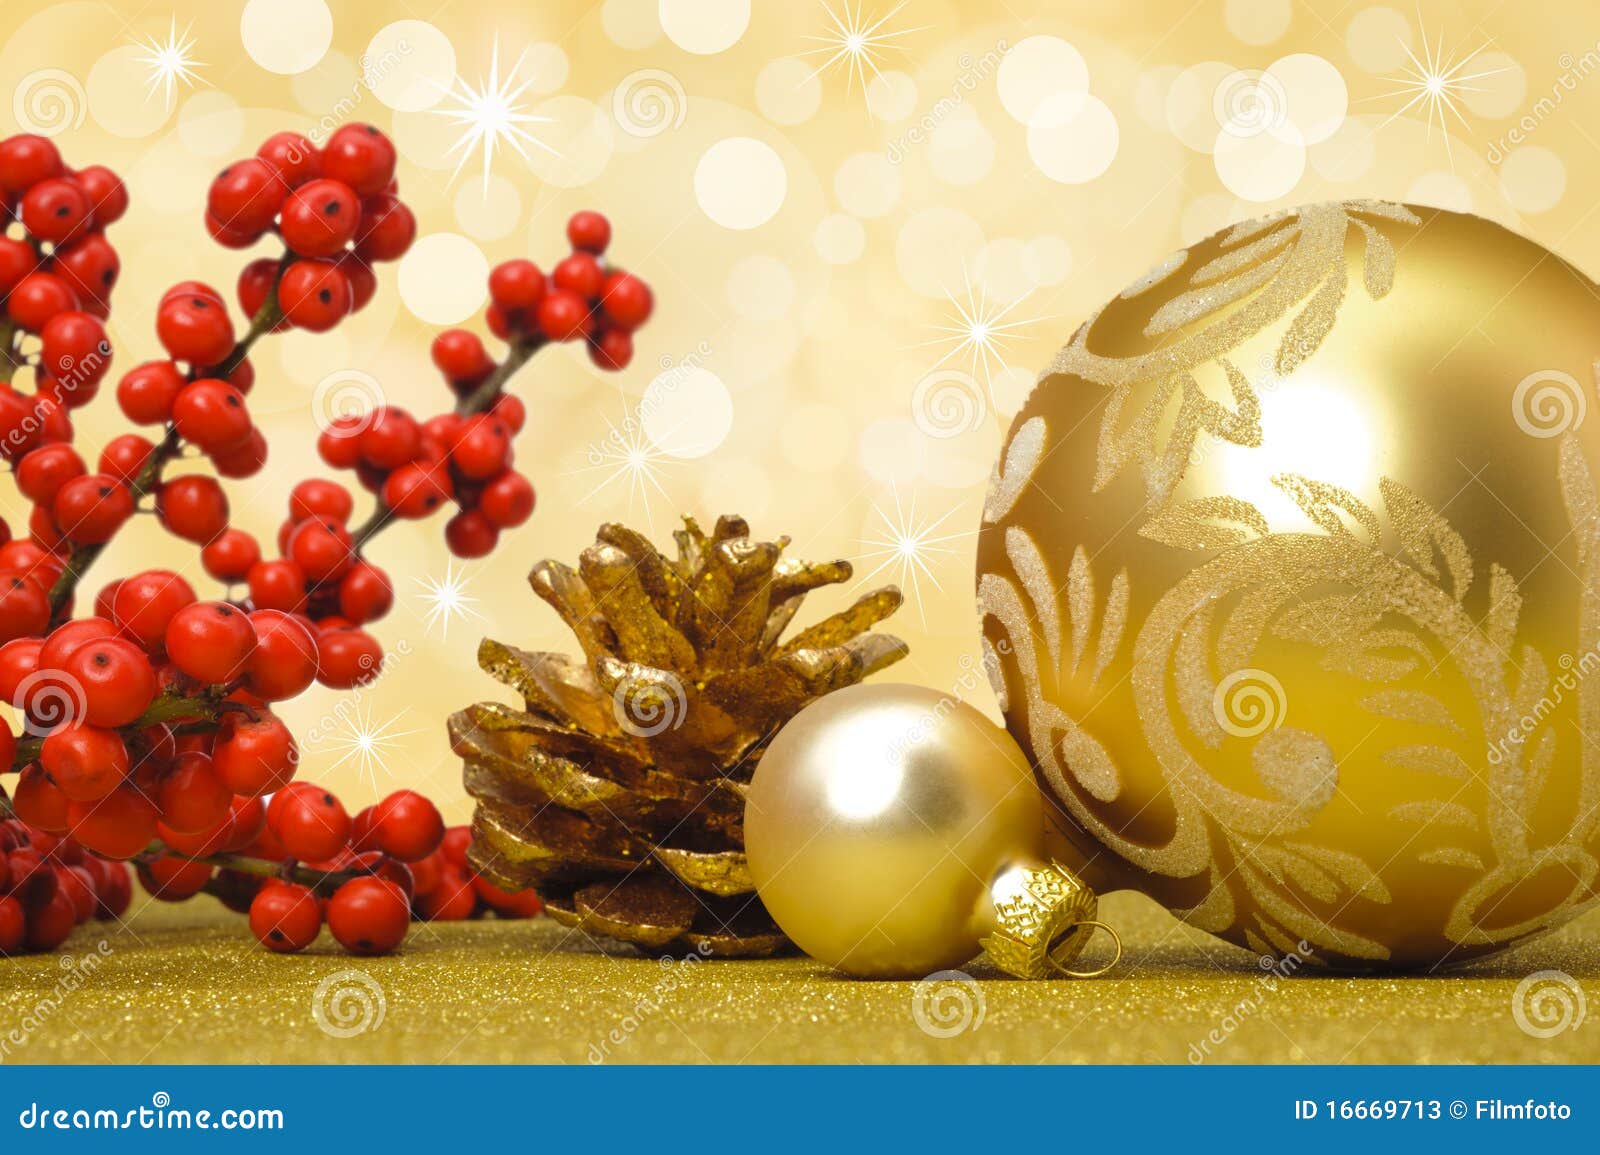 Christmas ball decoration stock image. Image of cone - 16669713